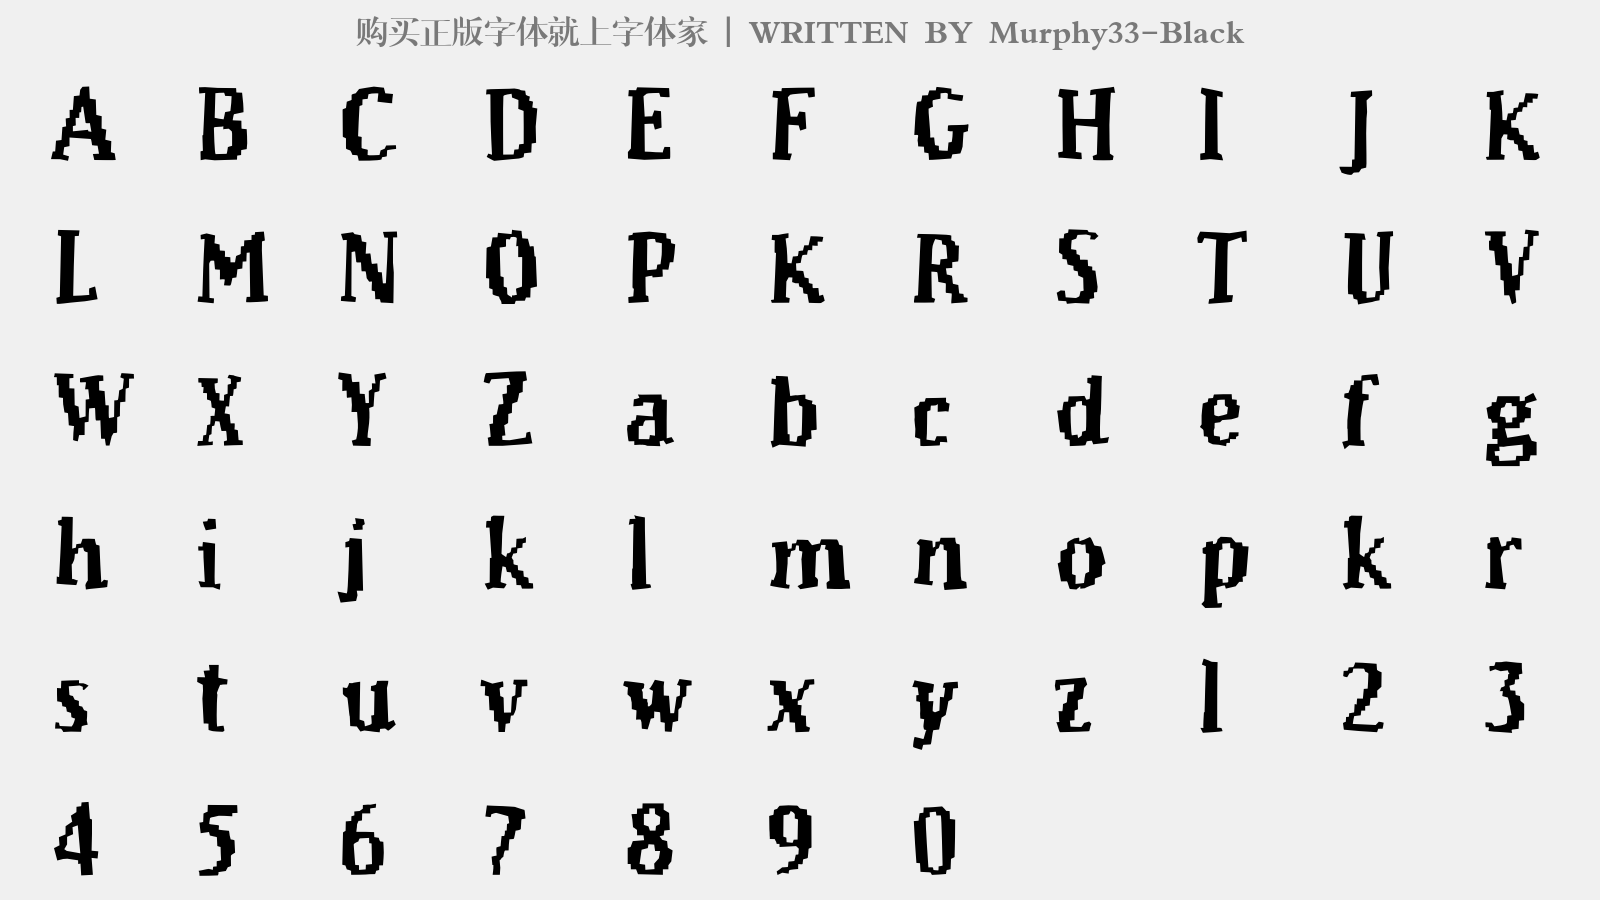 Murphy33-Black - 大写字母/小写字母/数字